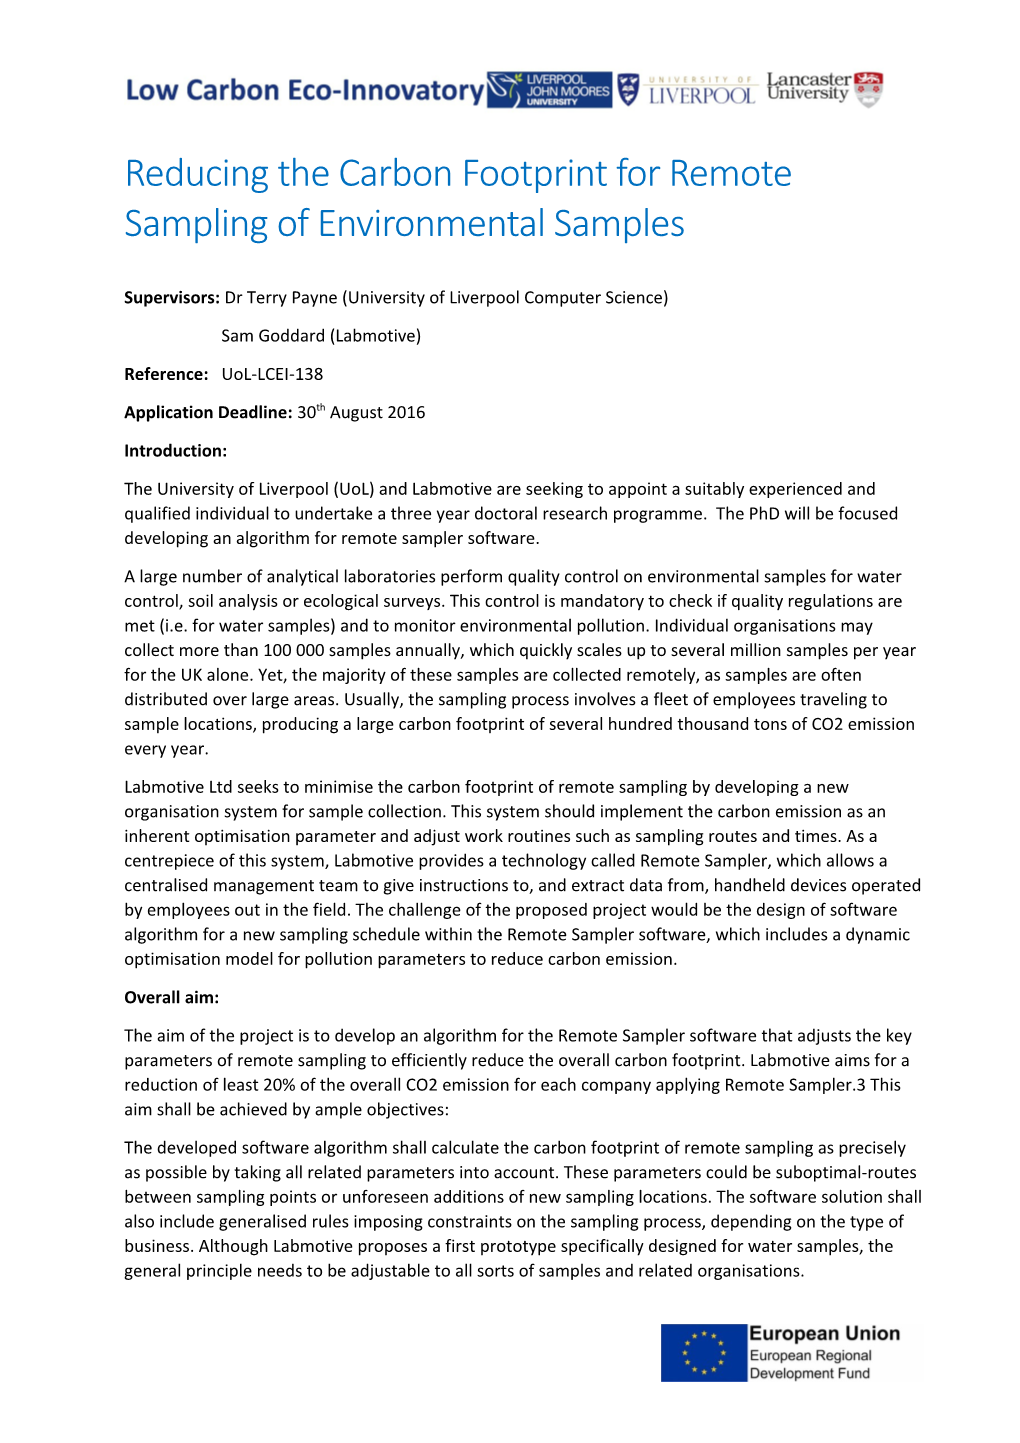 Reducing the Carbon Footprint for Remote Sampling of Environmental Samples